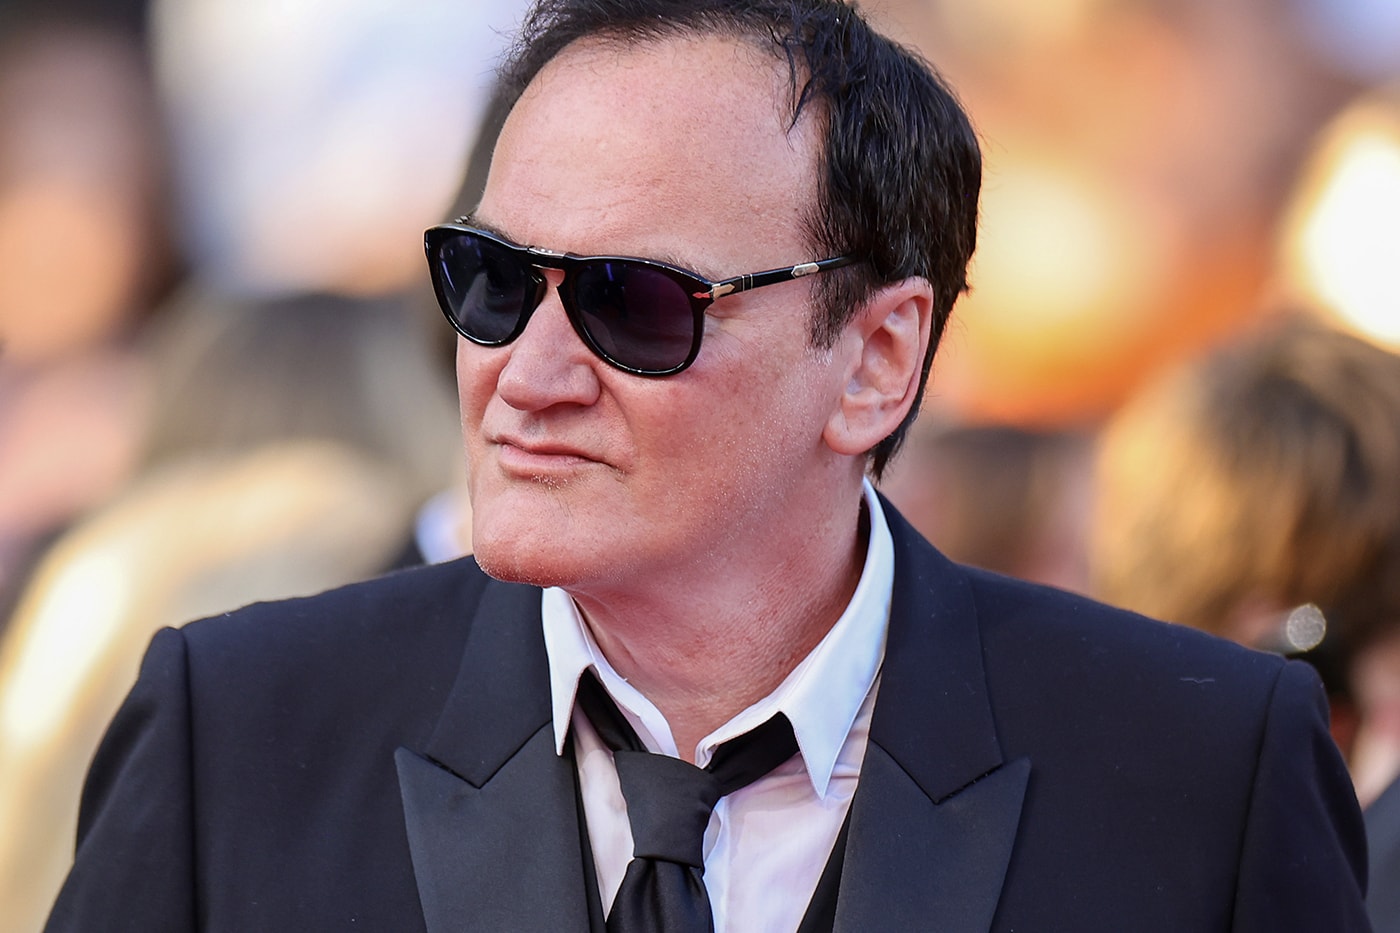 Quentin Tarantino Kill Bill vol 3 Not Happening